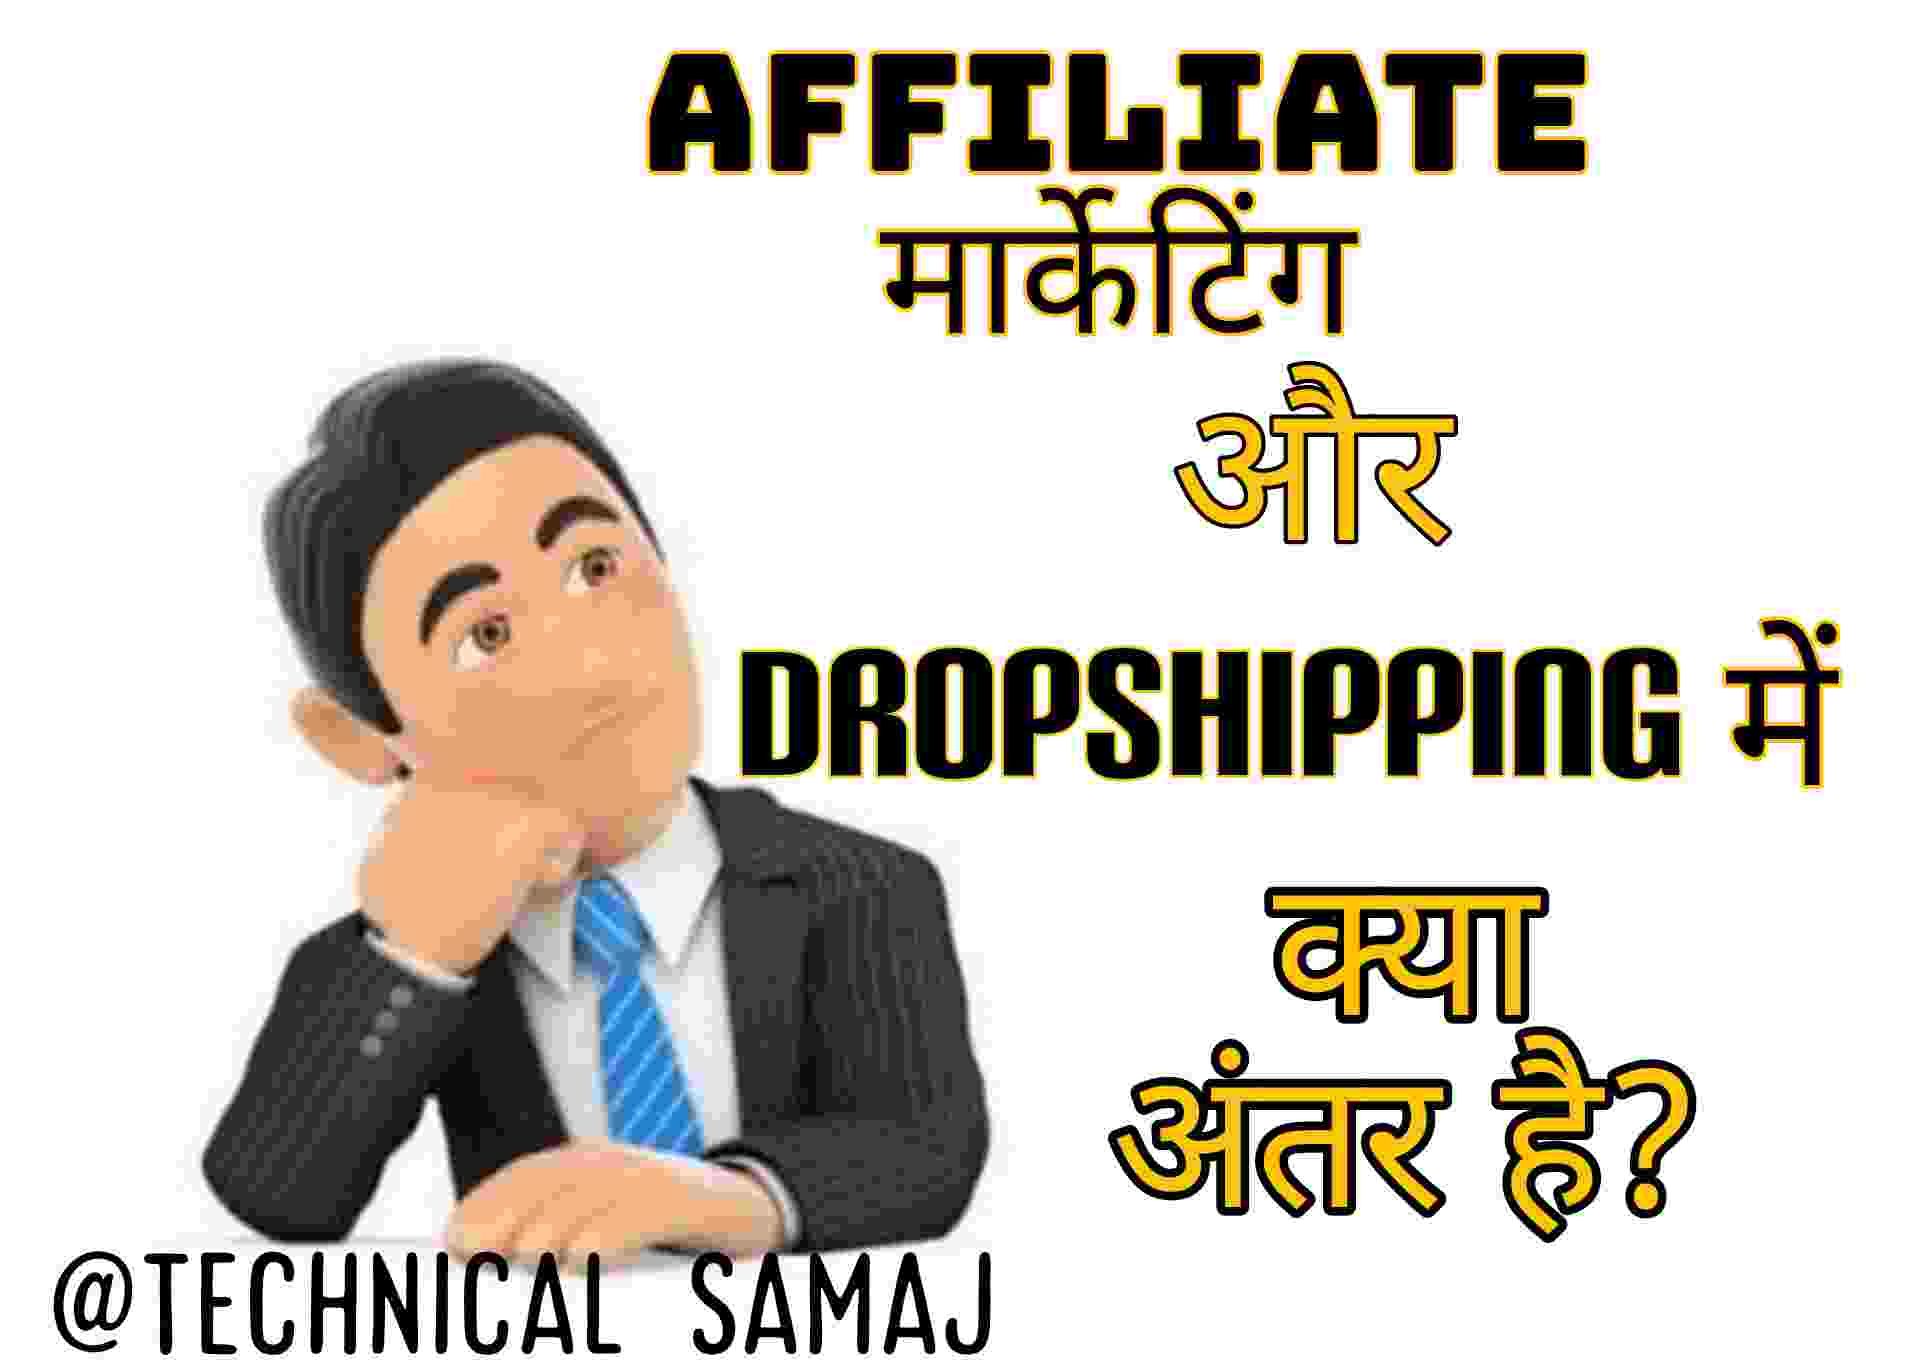 Affiliate marketing or dropshipping mein kya Antar hota hai Puri Jankari Hindi mein marketing kaise karen aur dropshipping kaise karen